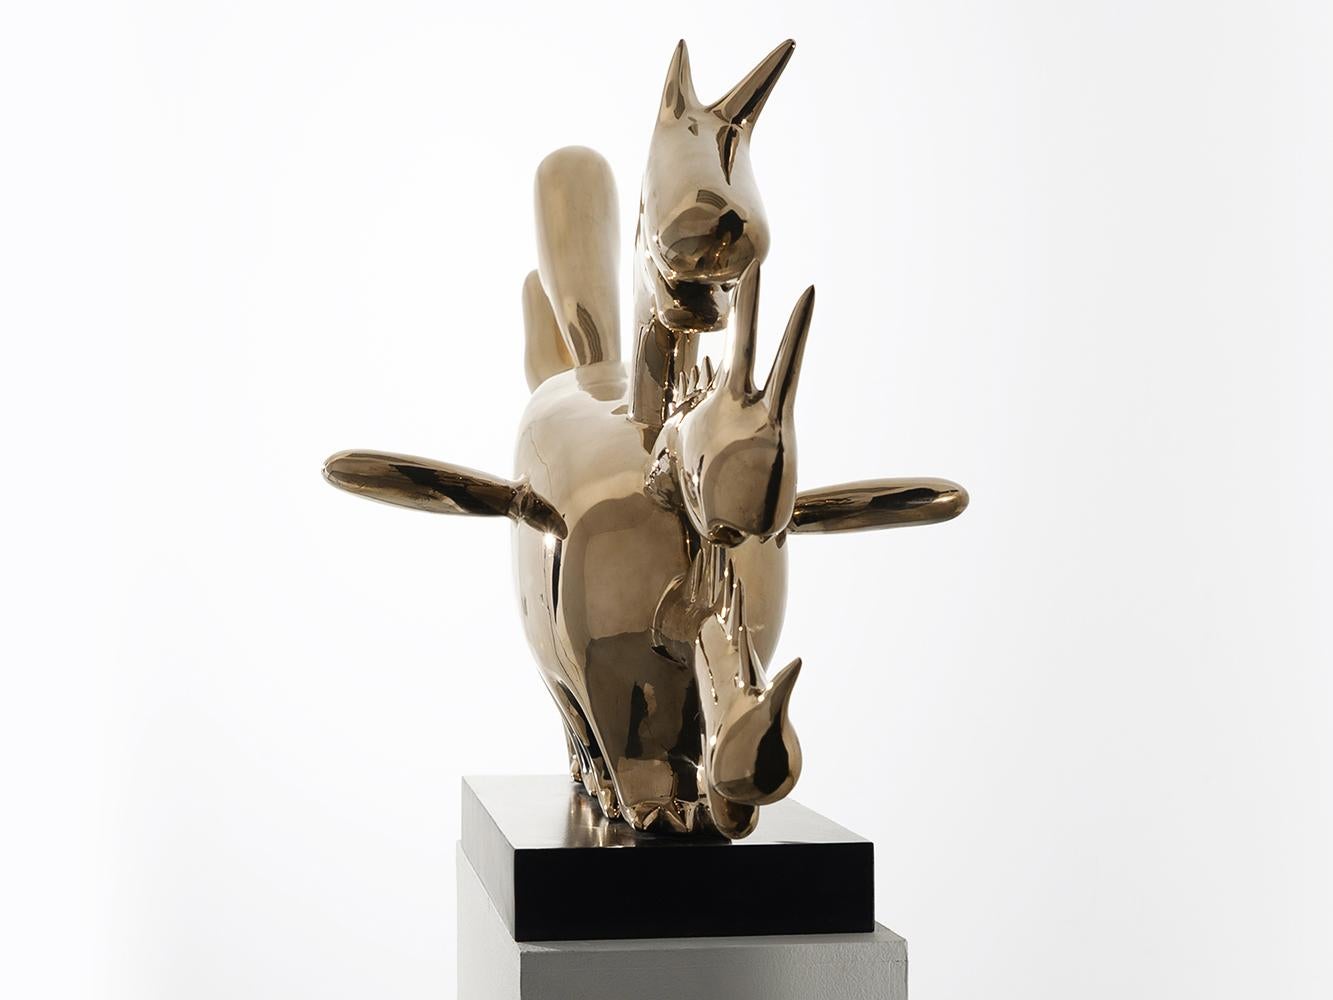 Polycephalous by Marcelo Martin Burgos - Bronze sculpture, golden, fantastic For Sale 1